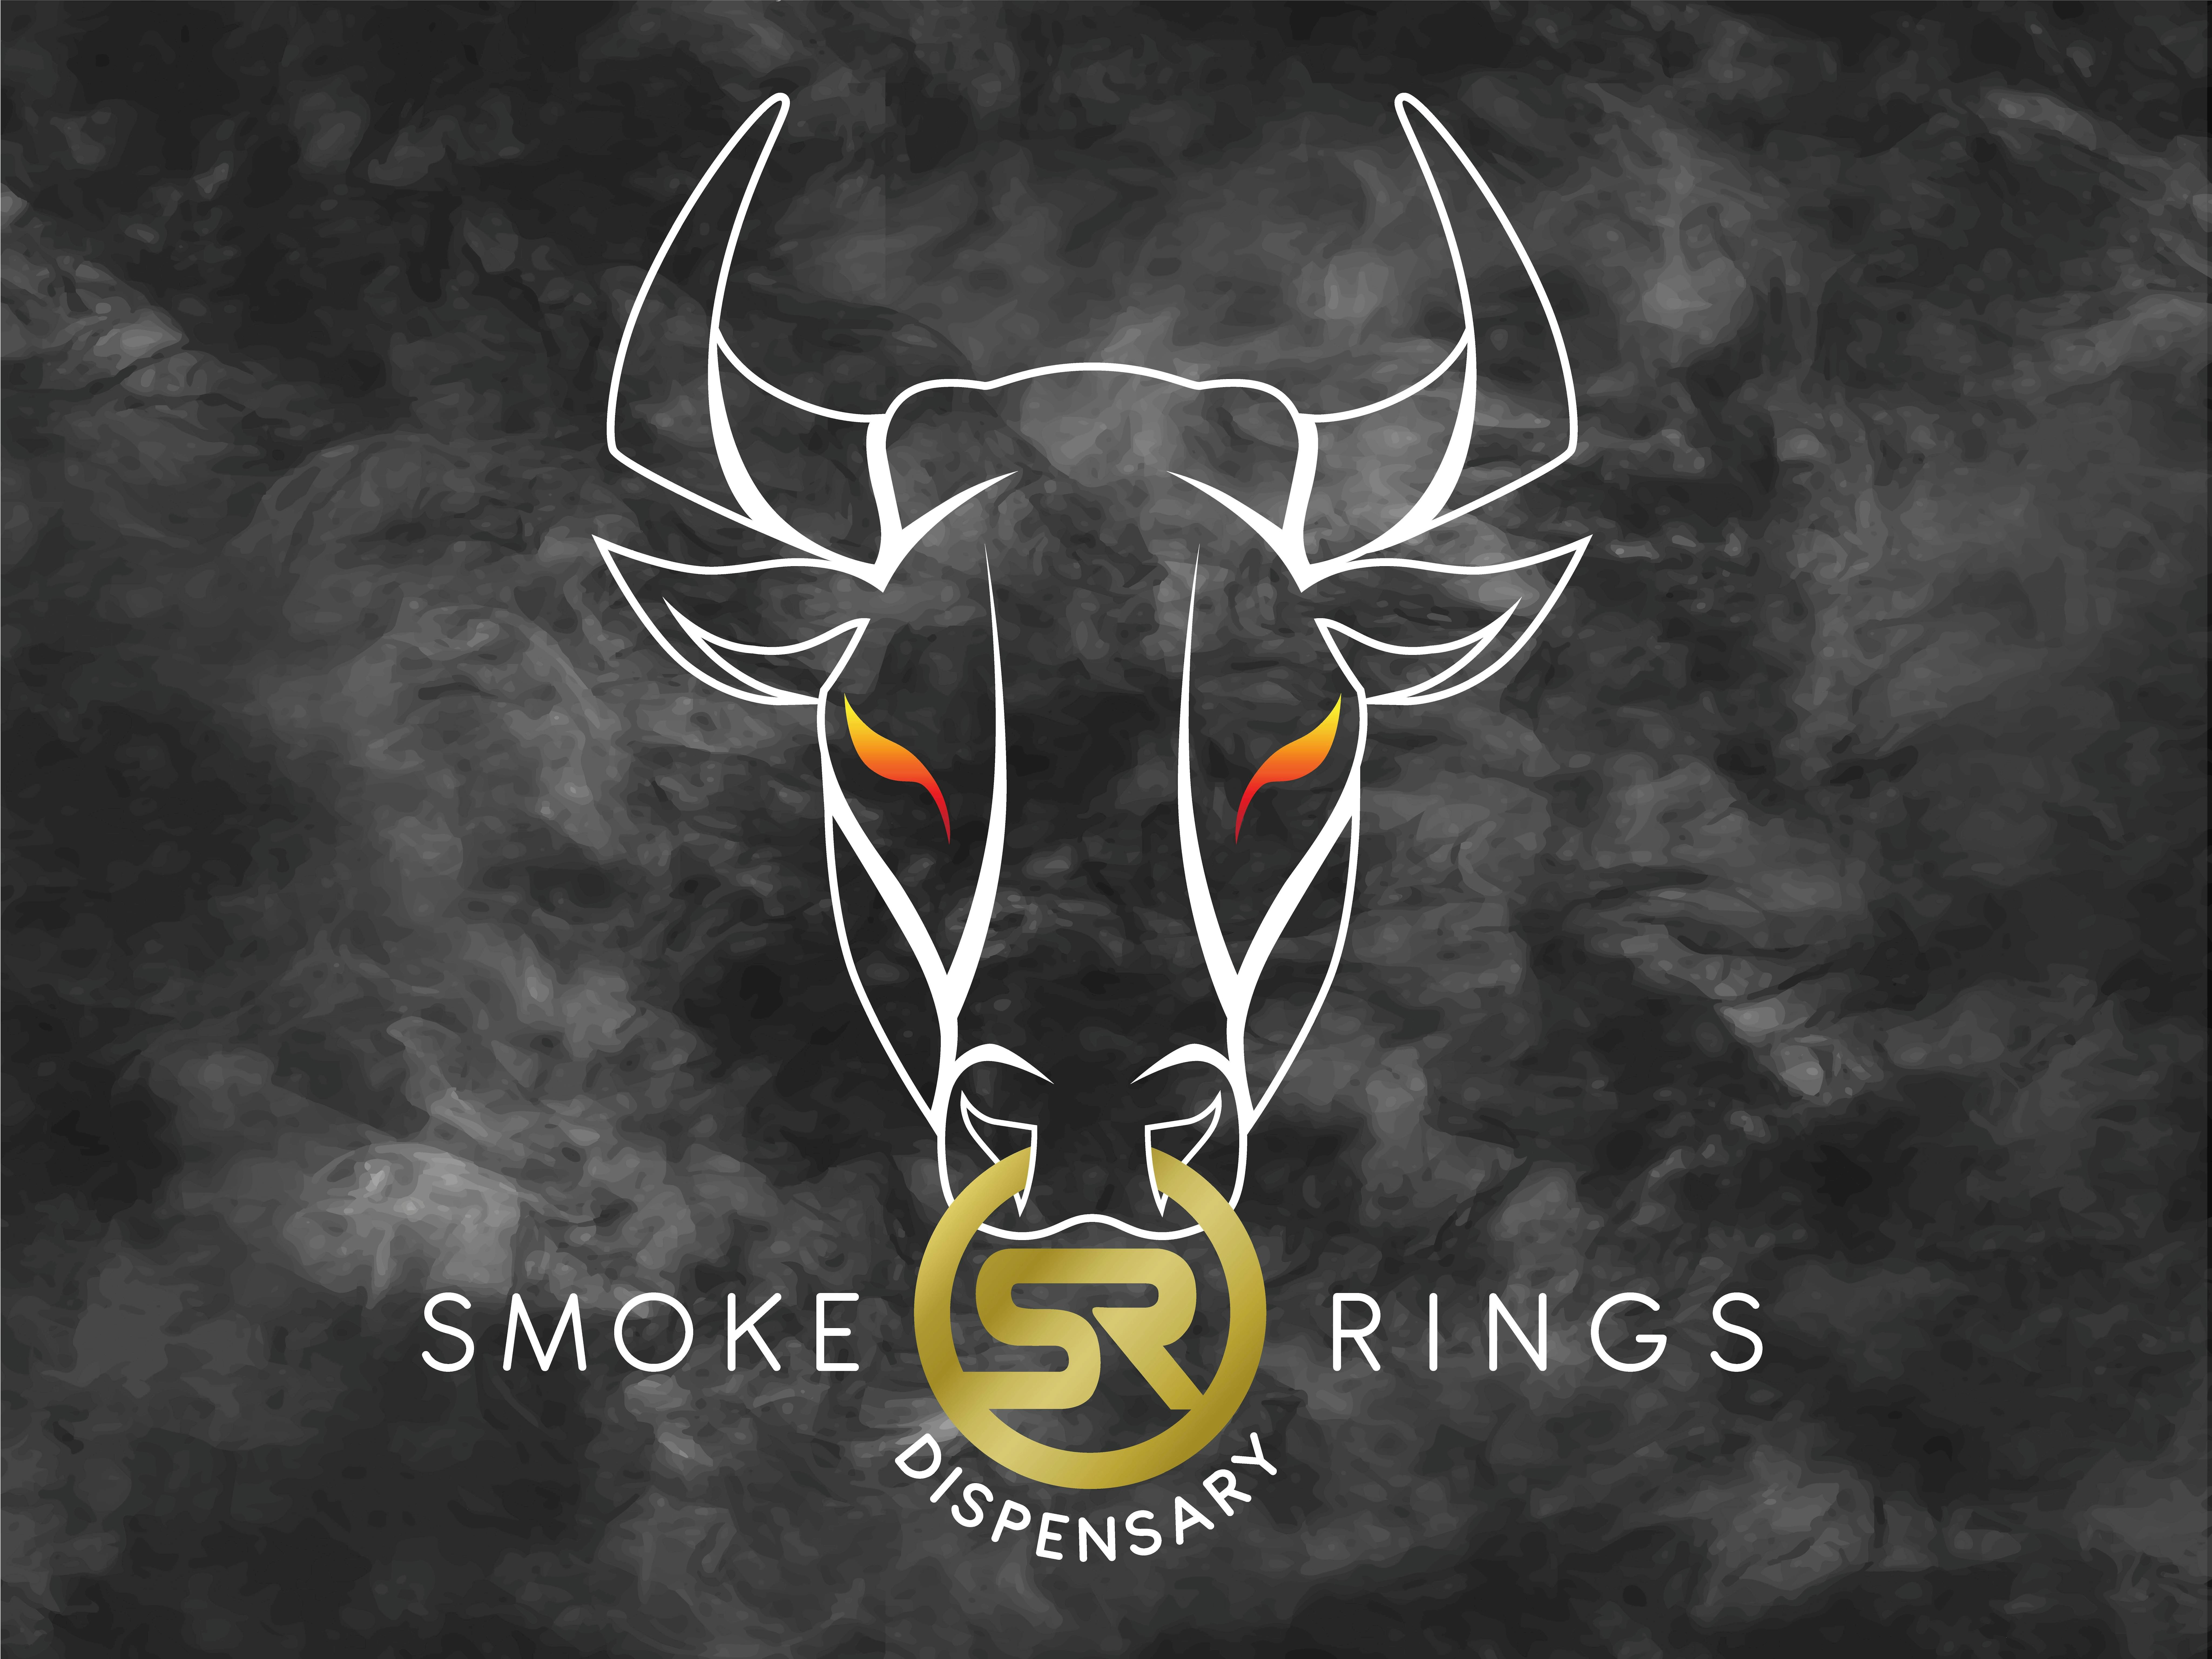 Smoke Rings 21+ Recreational Dispensary logo